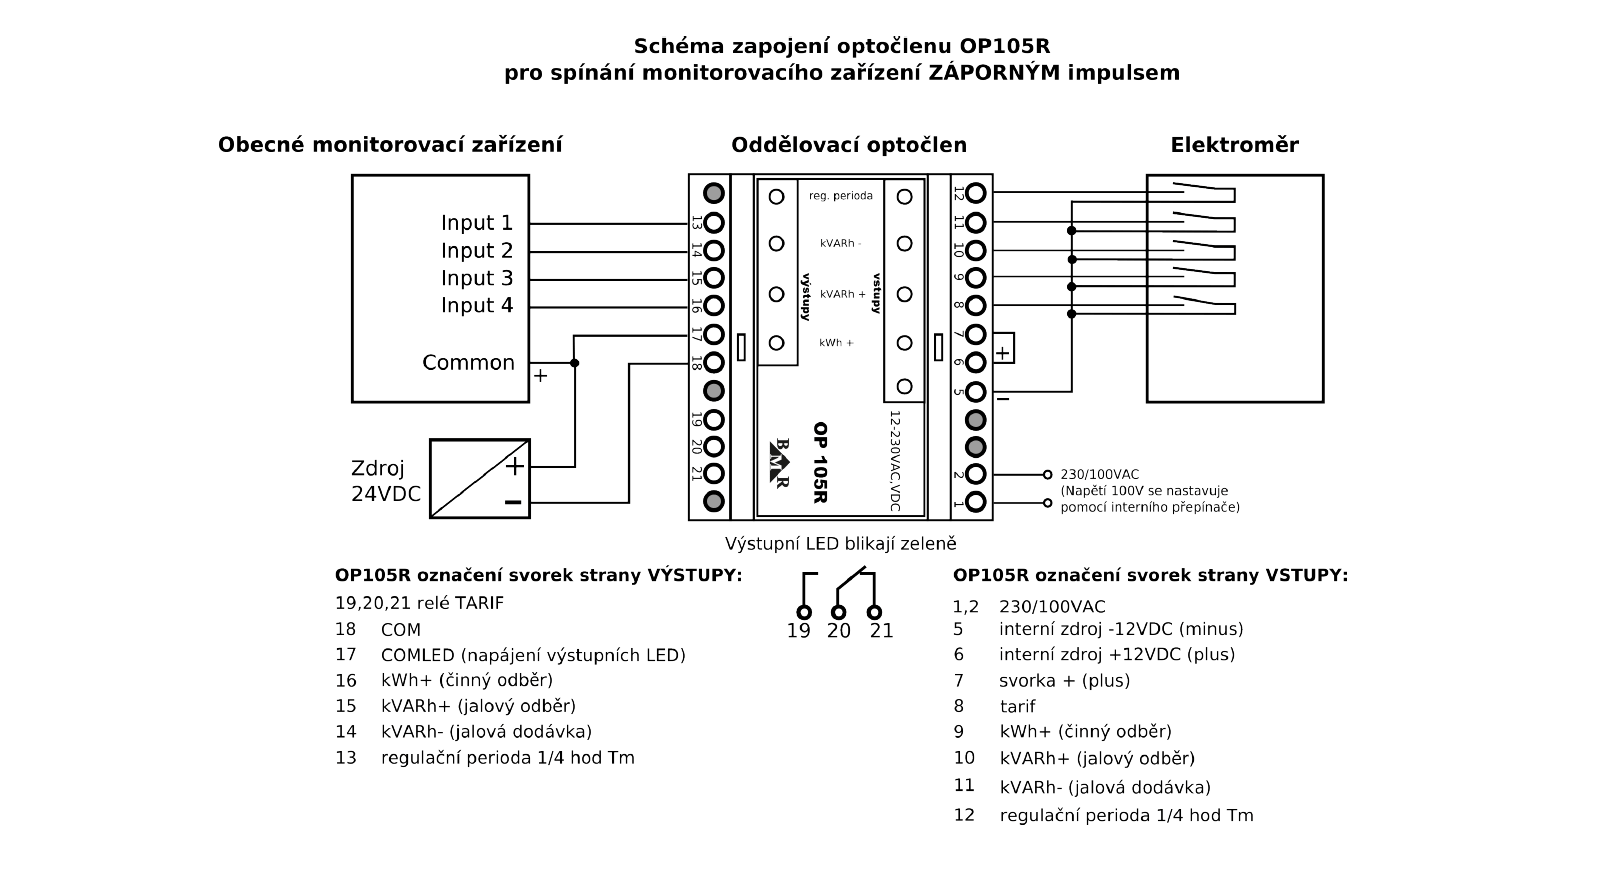 Schéma zapojení OP105R